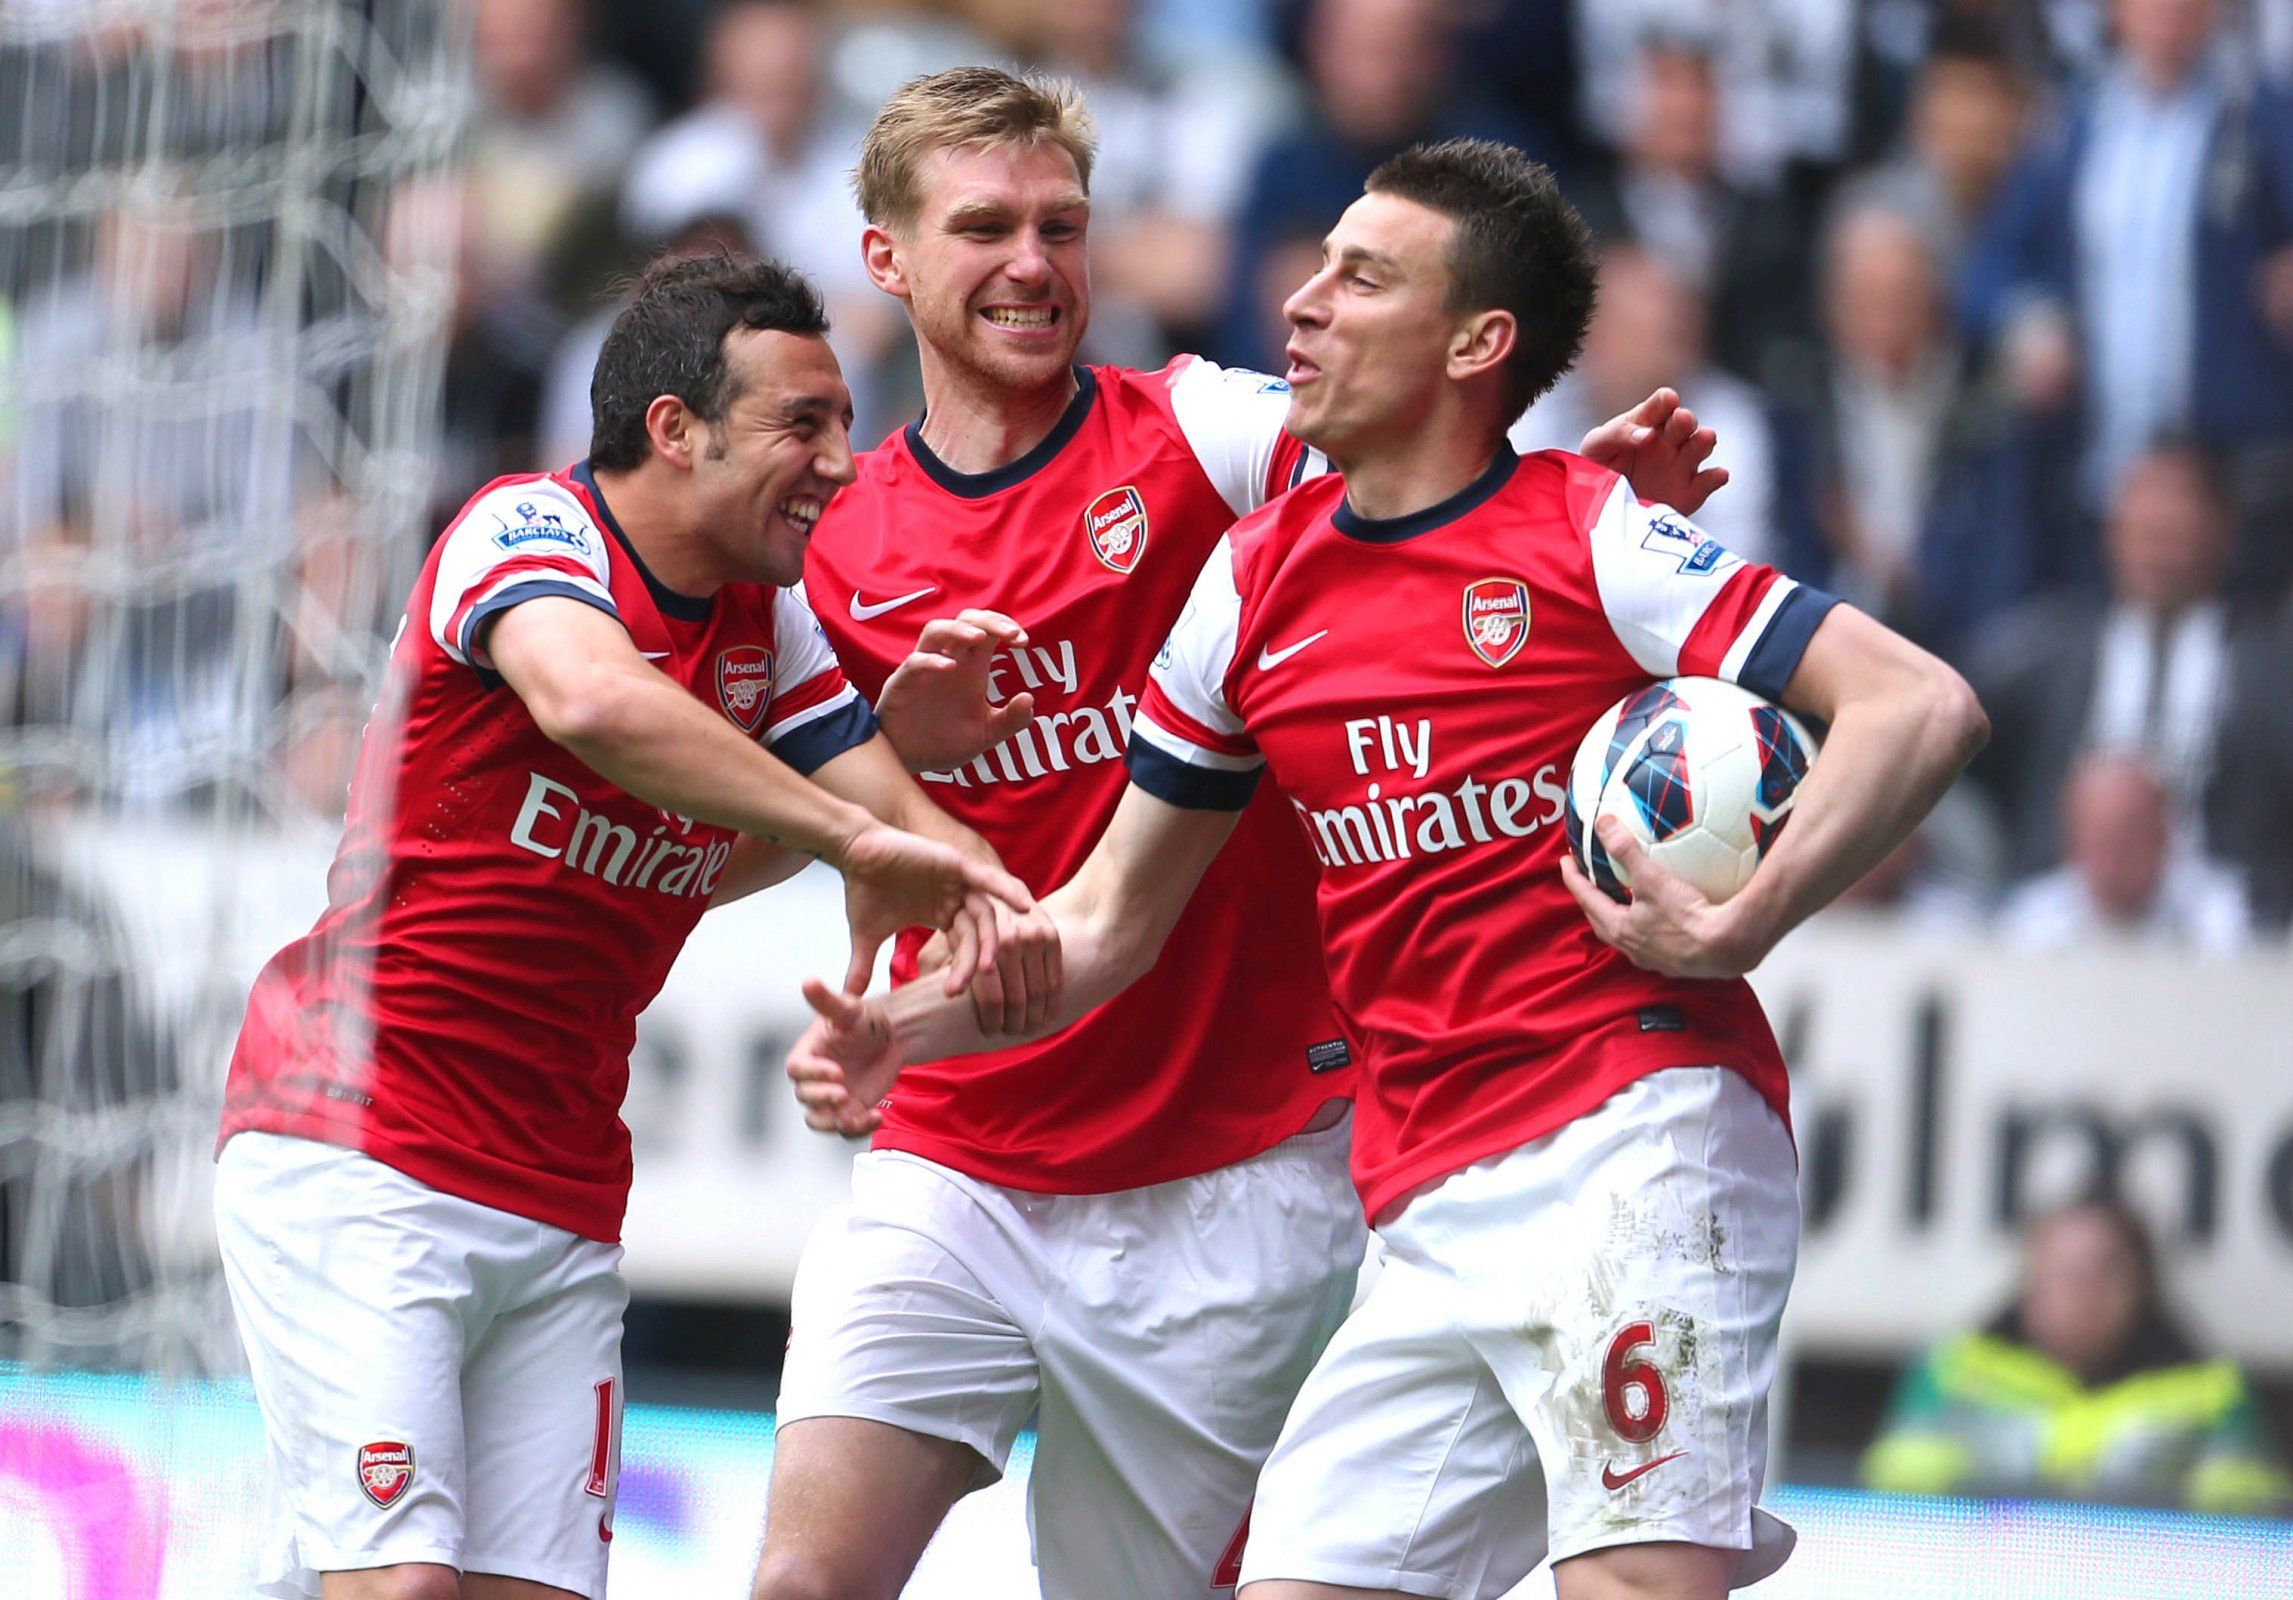 Laurent Koscielny celebrates scoring Arsenal's goal vs Newcastle with Santi Cazorla and Per Mertesacker